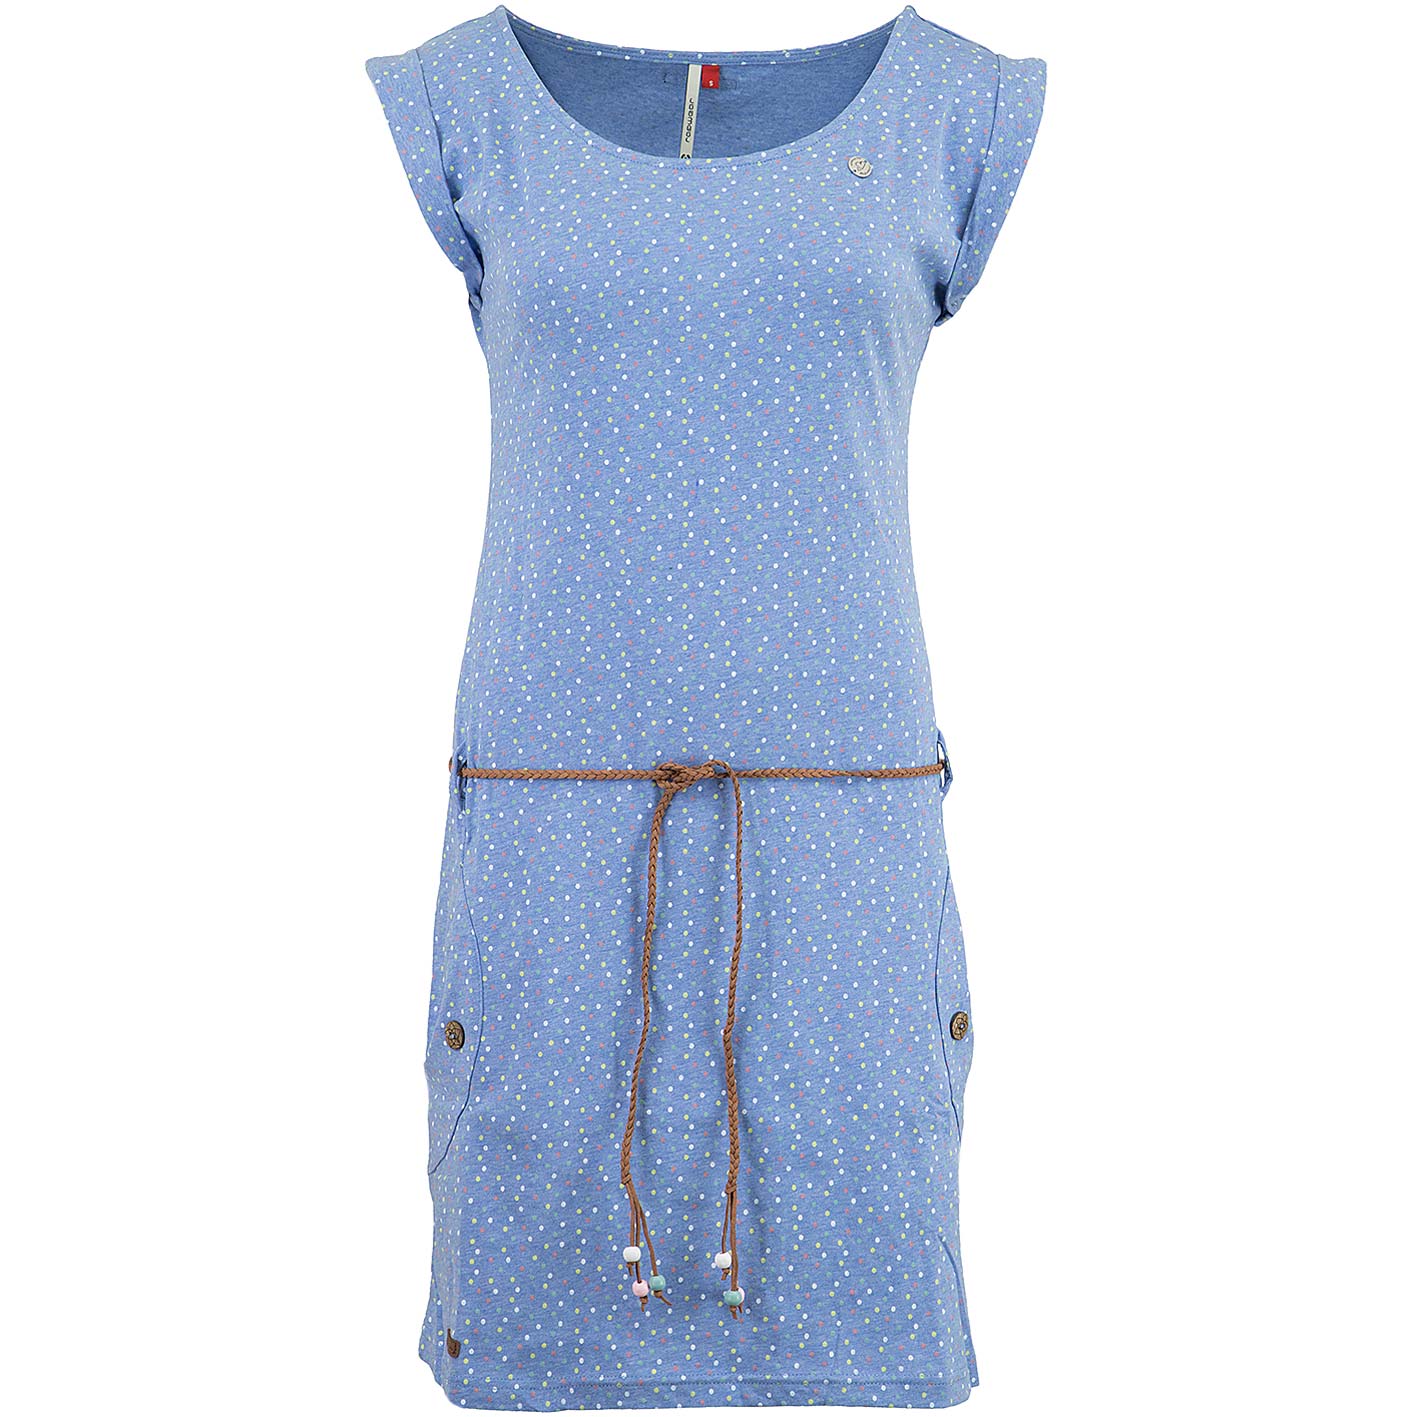 ☆ Ragwear Kleid Tag Dots blau - hier bestellen!